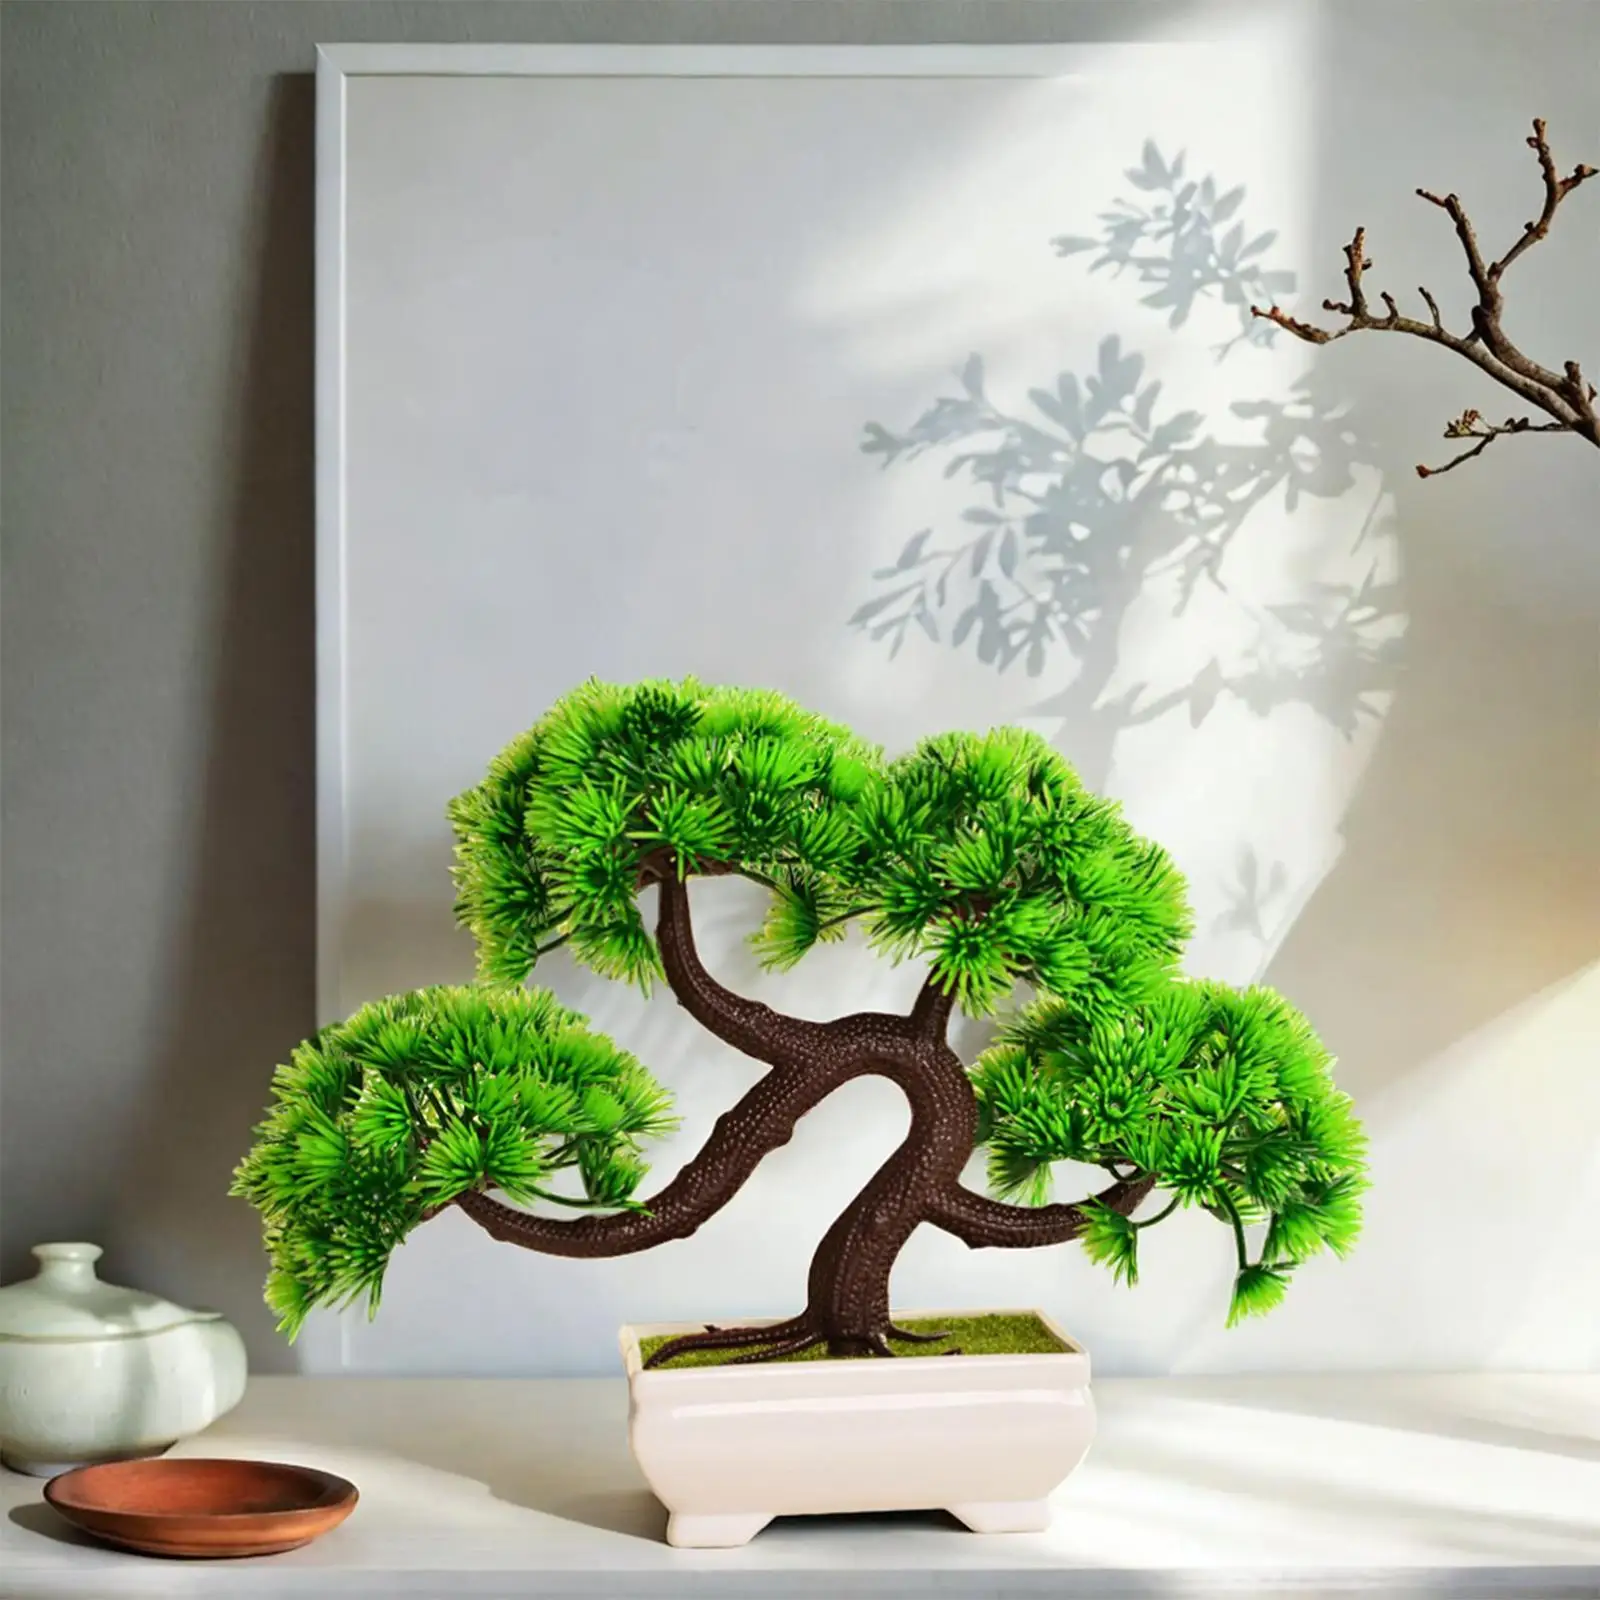 Artificial Bonsai Tree Desktop Small Fake Tree for Bookshelf Office Tabletop